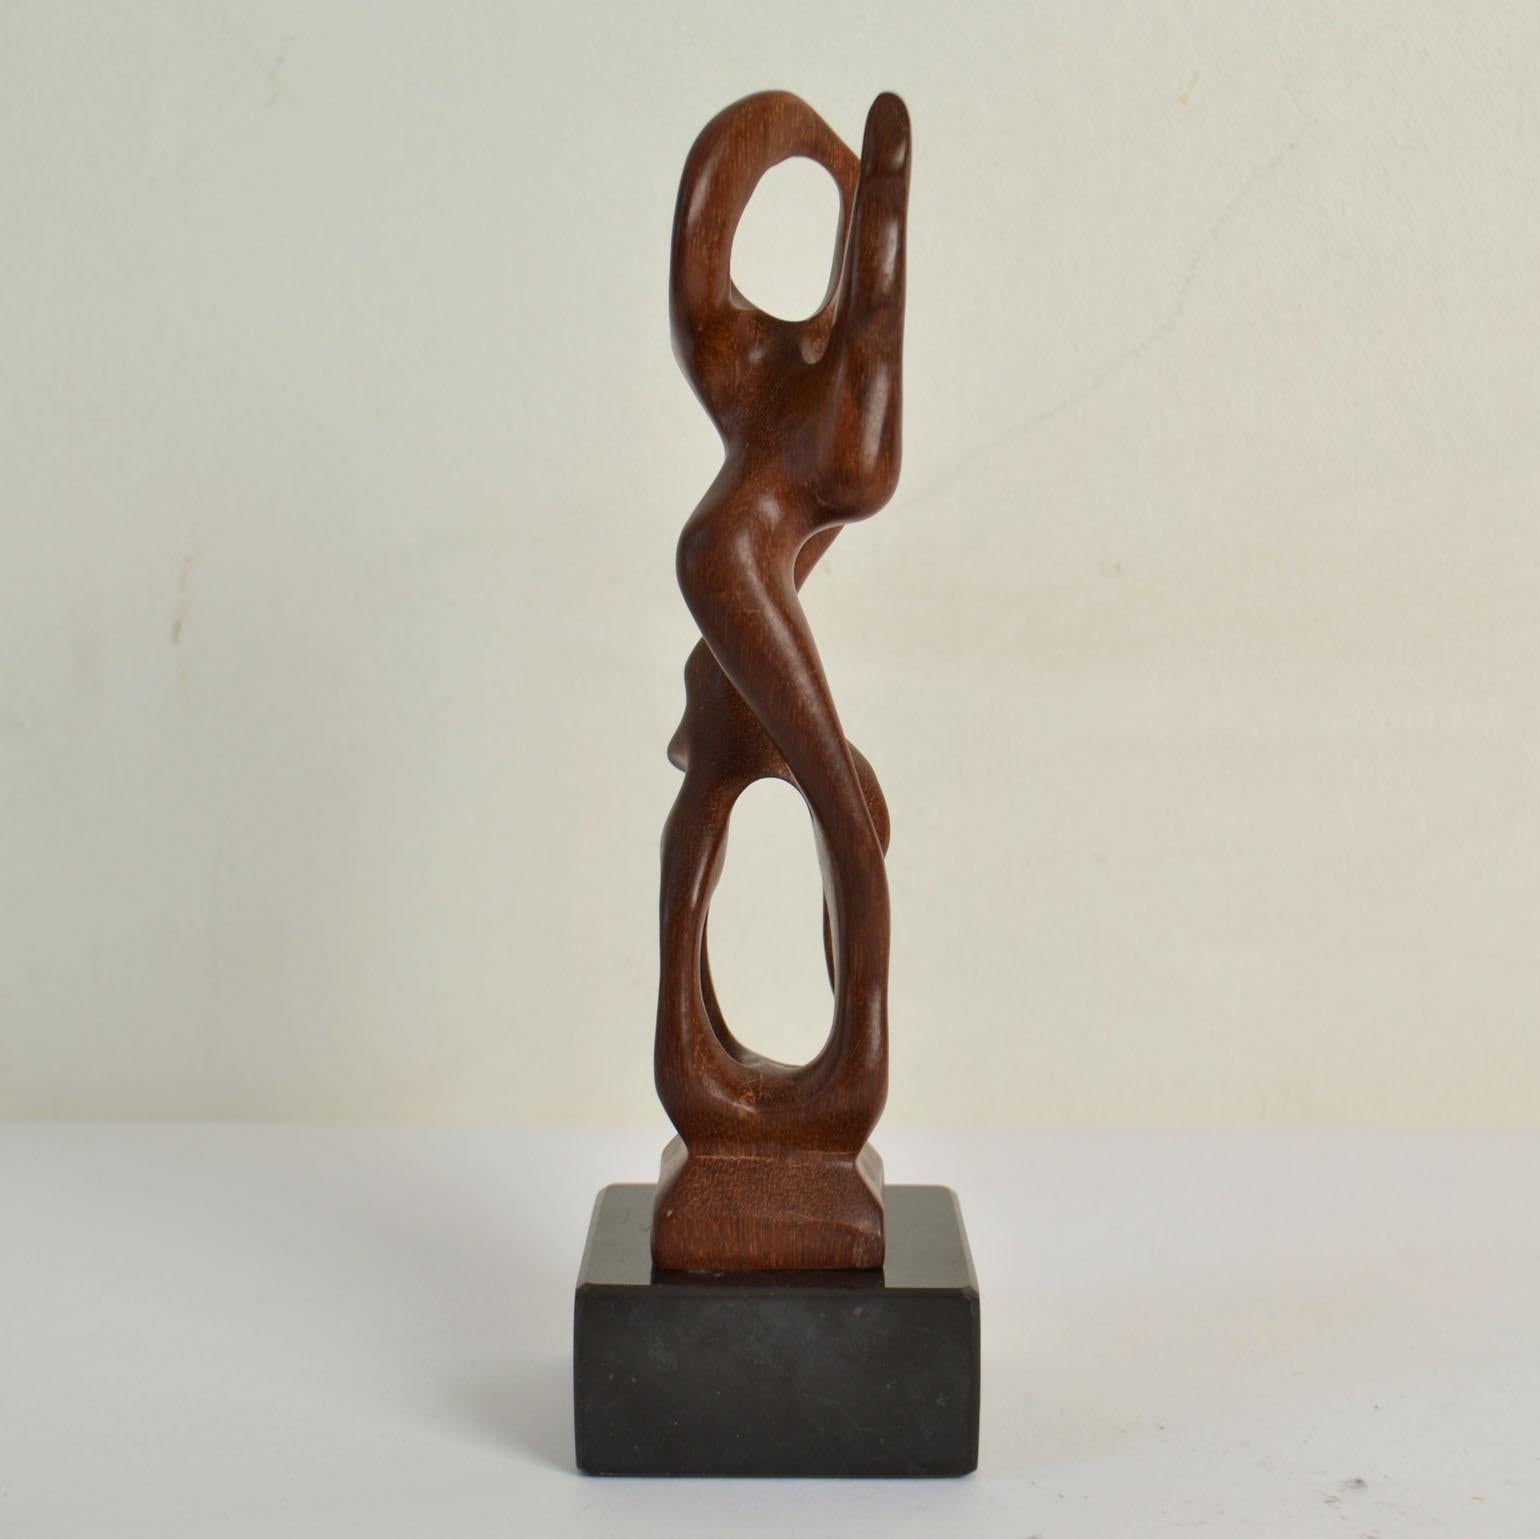 British Hand Carved Biomorphic Wooden Sculptures